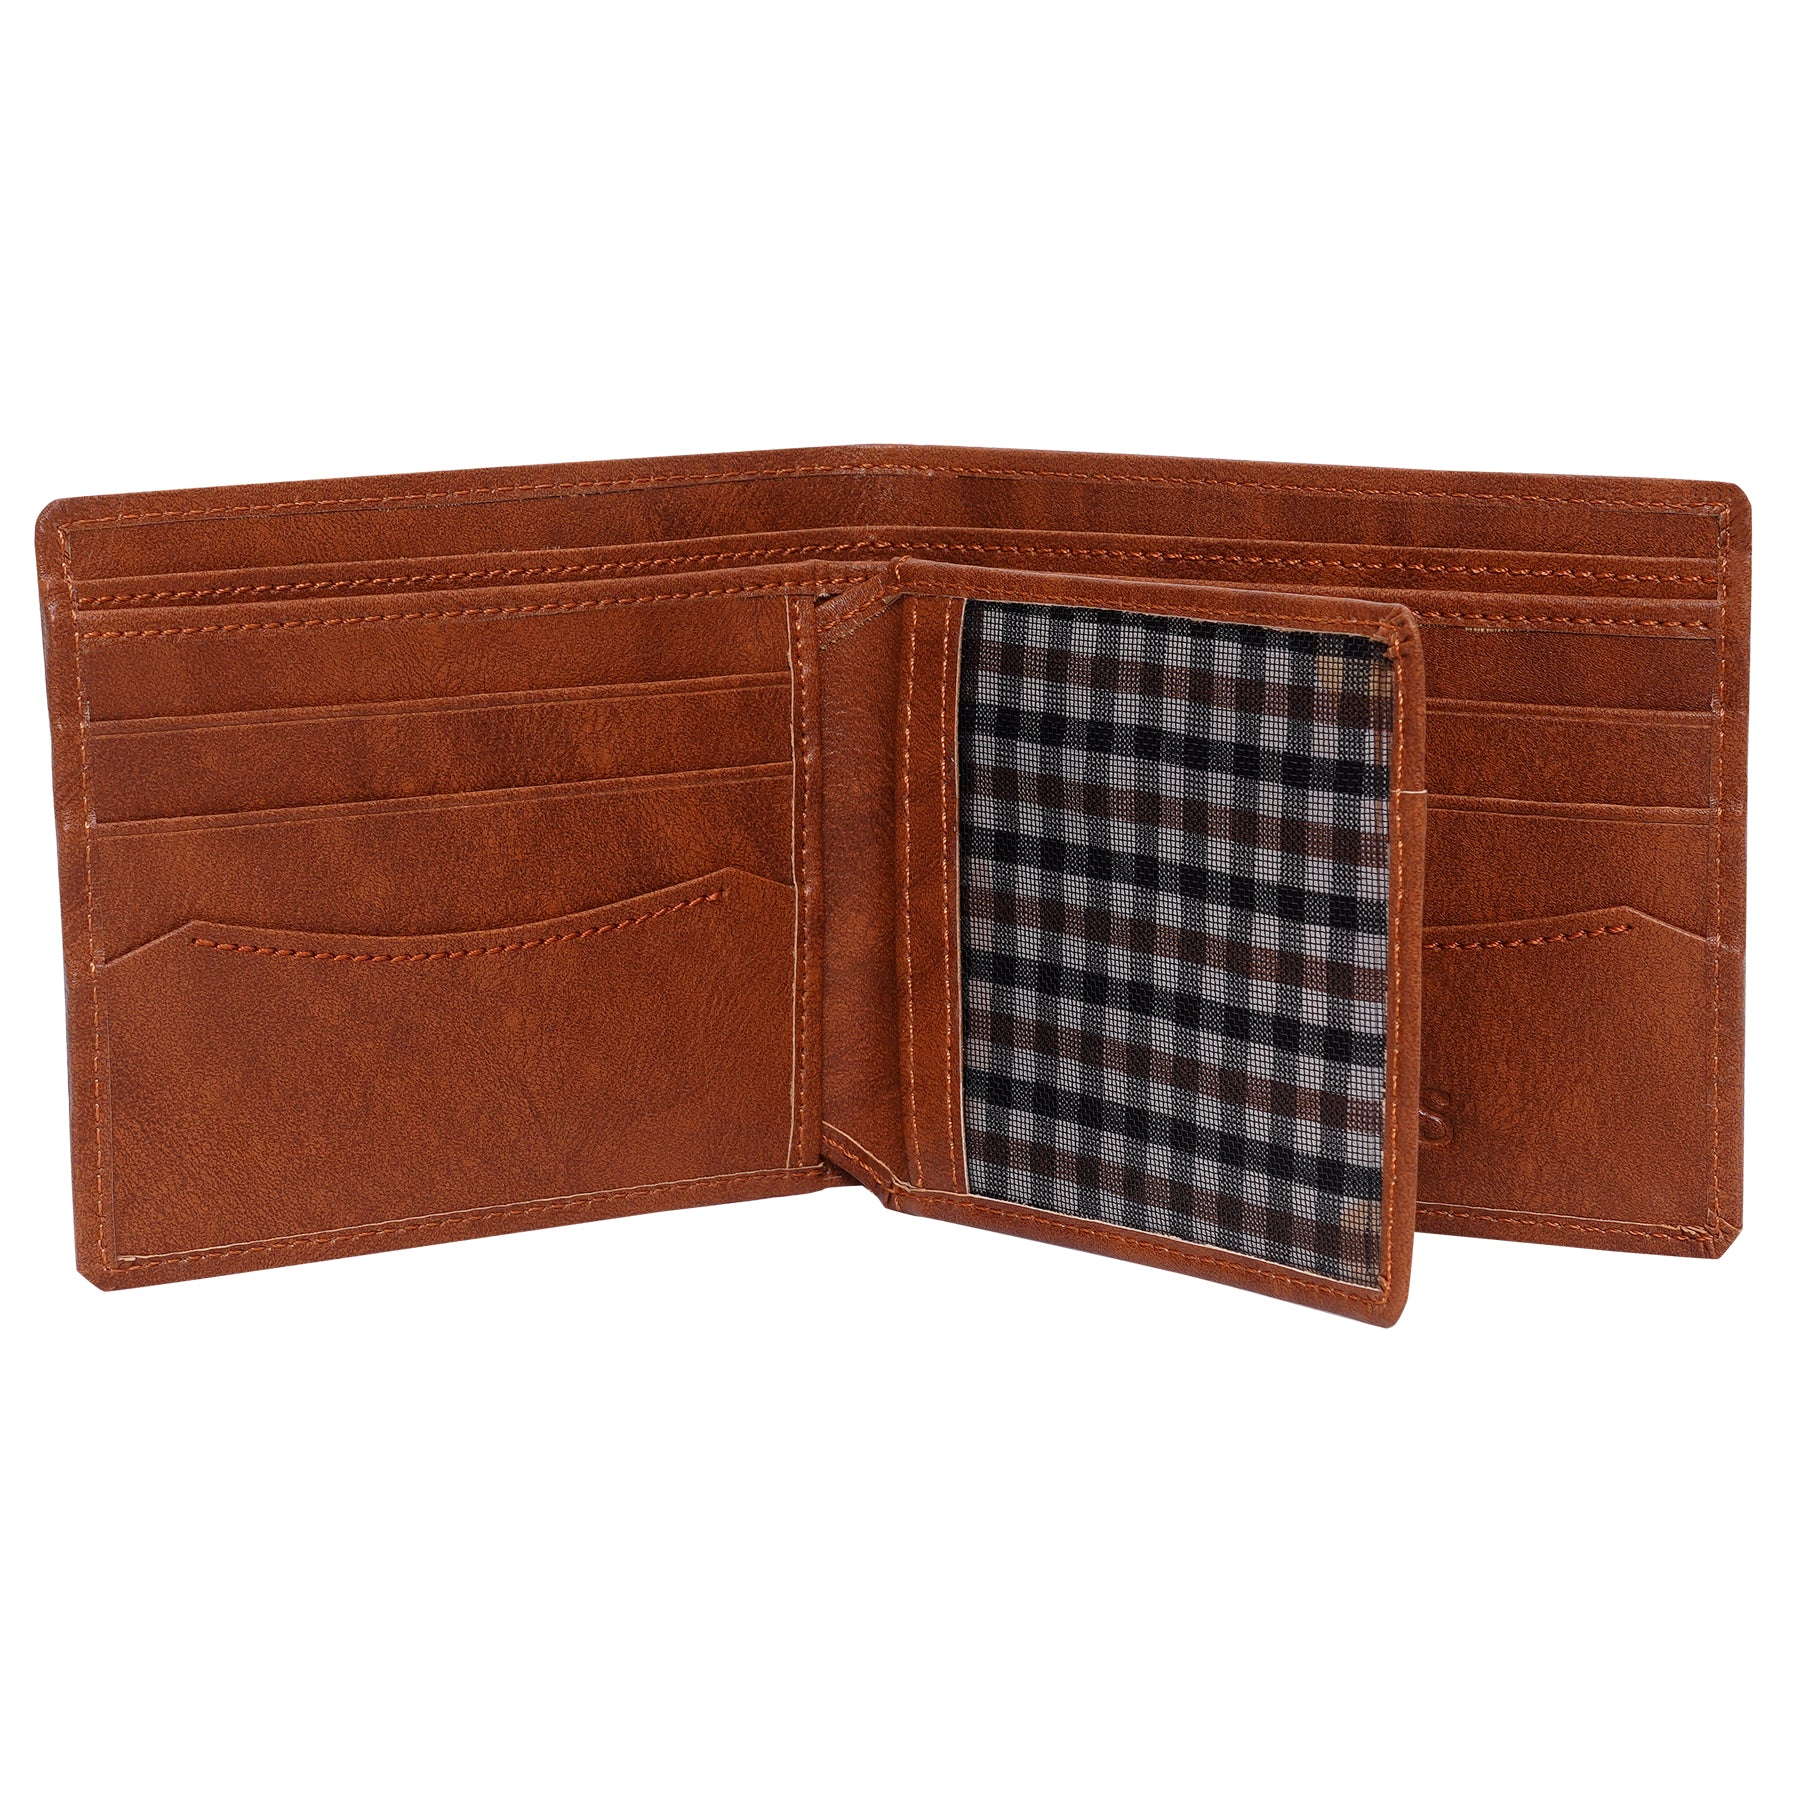 Makas men's wallet , internal look 3,color - Tan